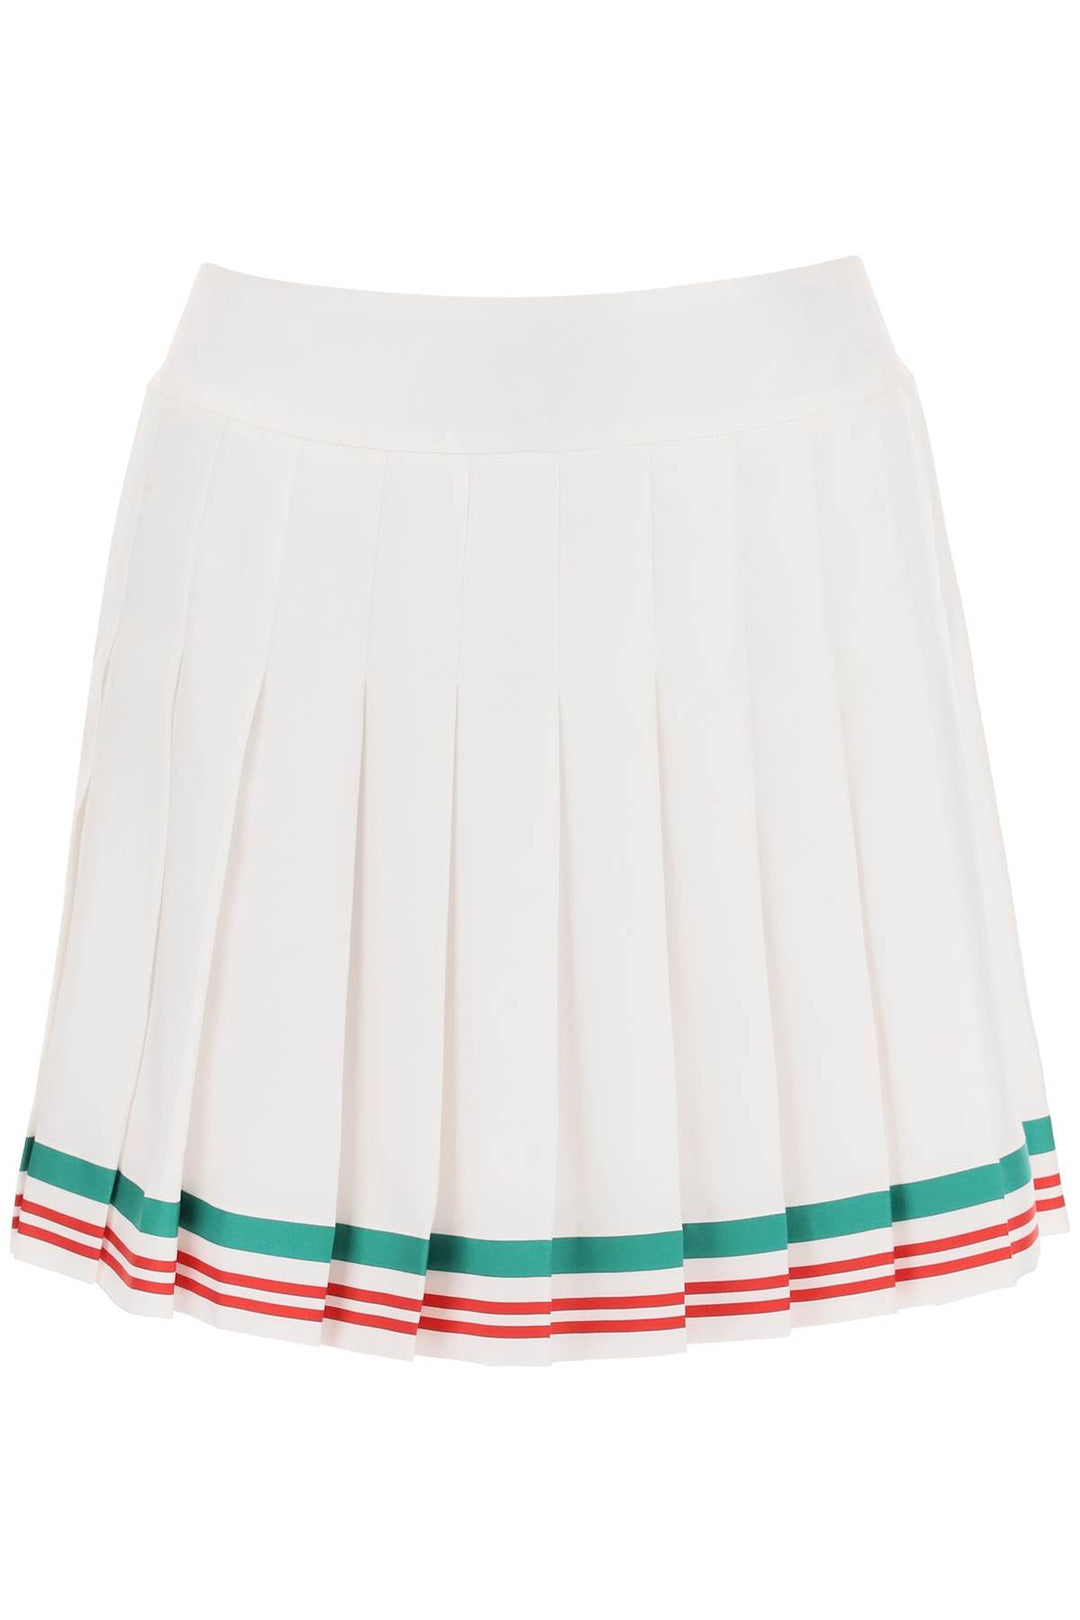 Casablanca casaway tennis mini skirt-0